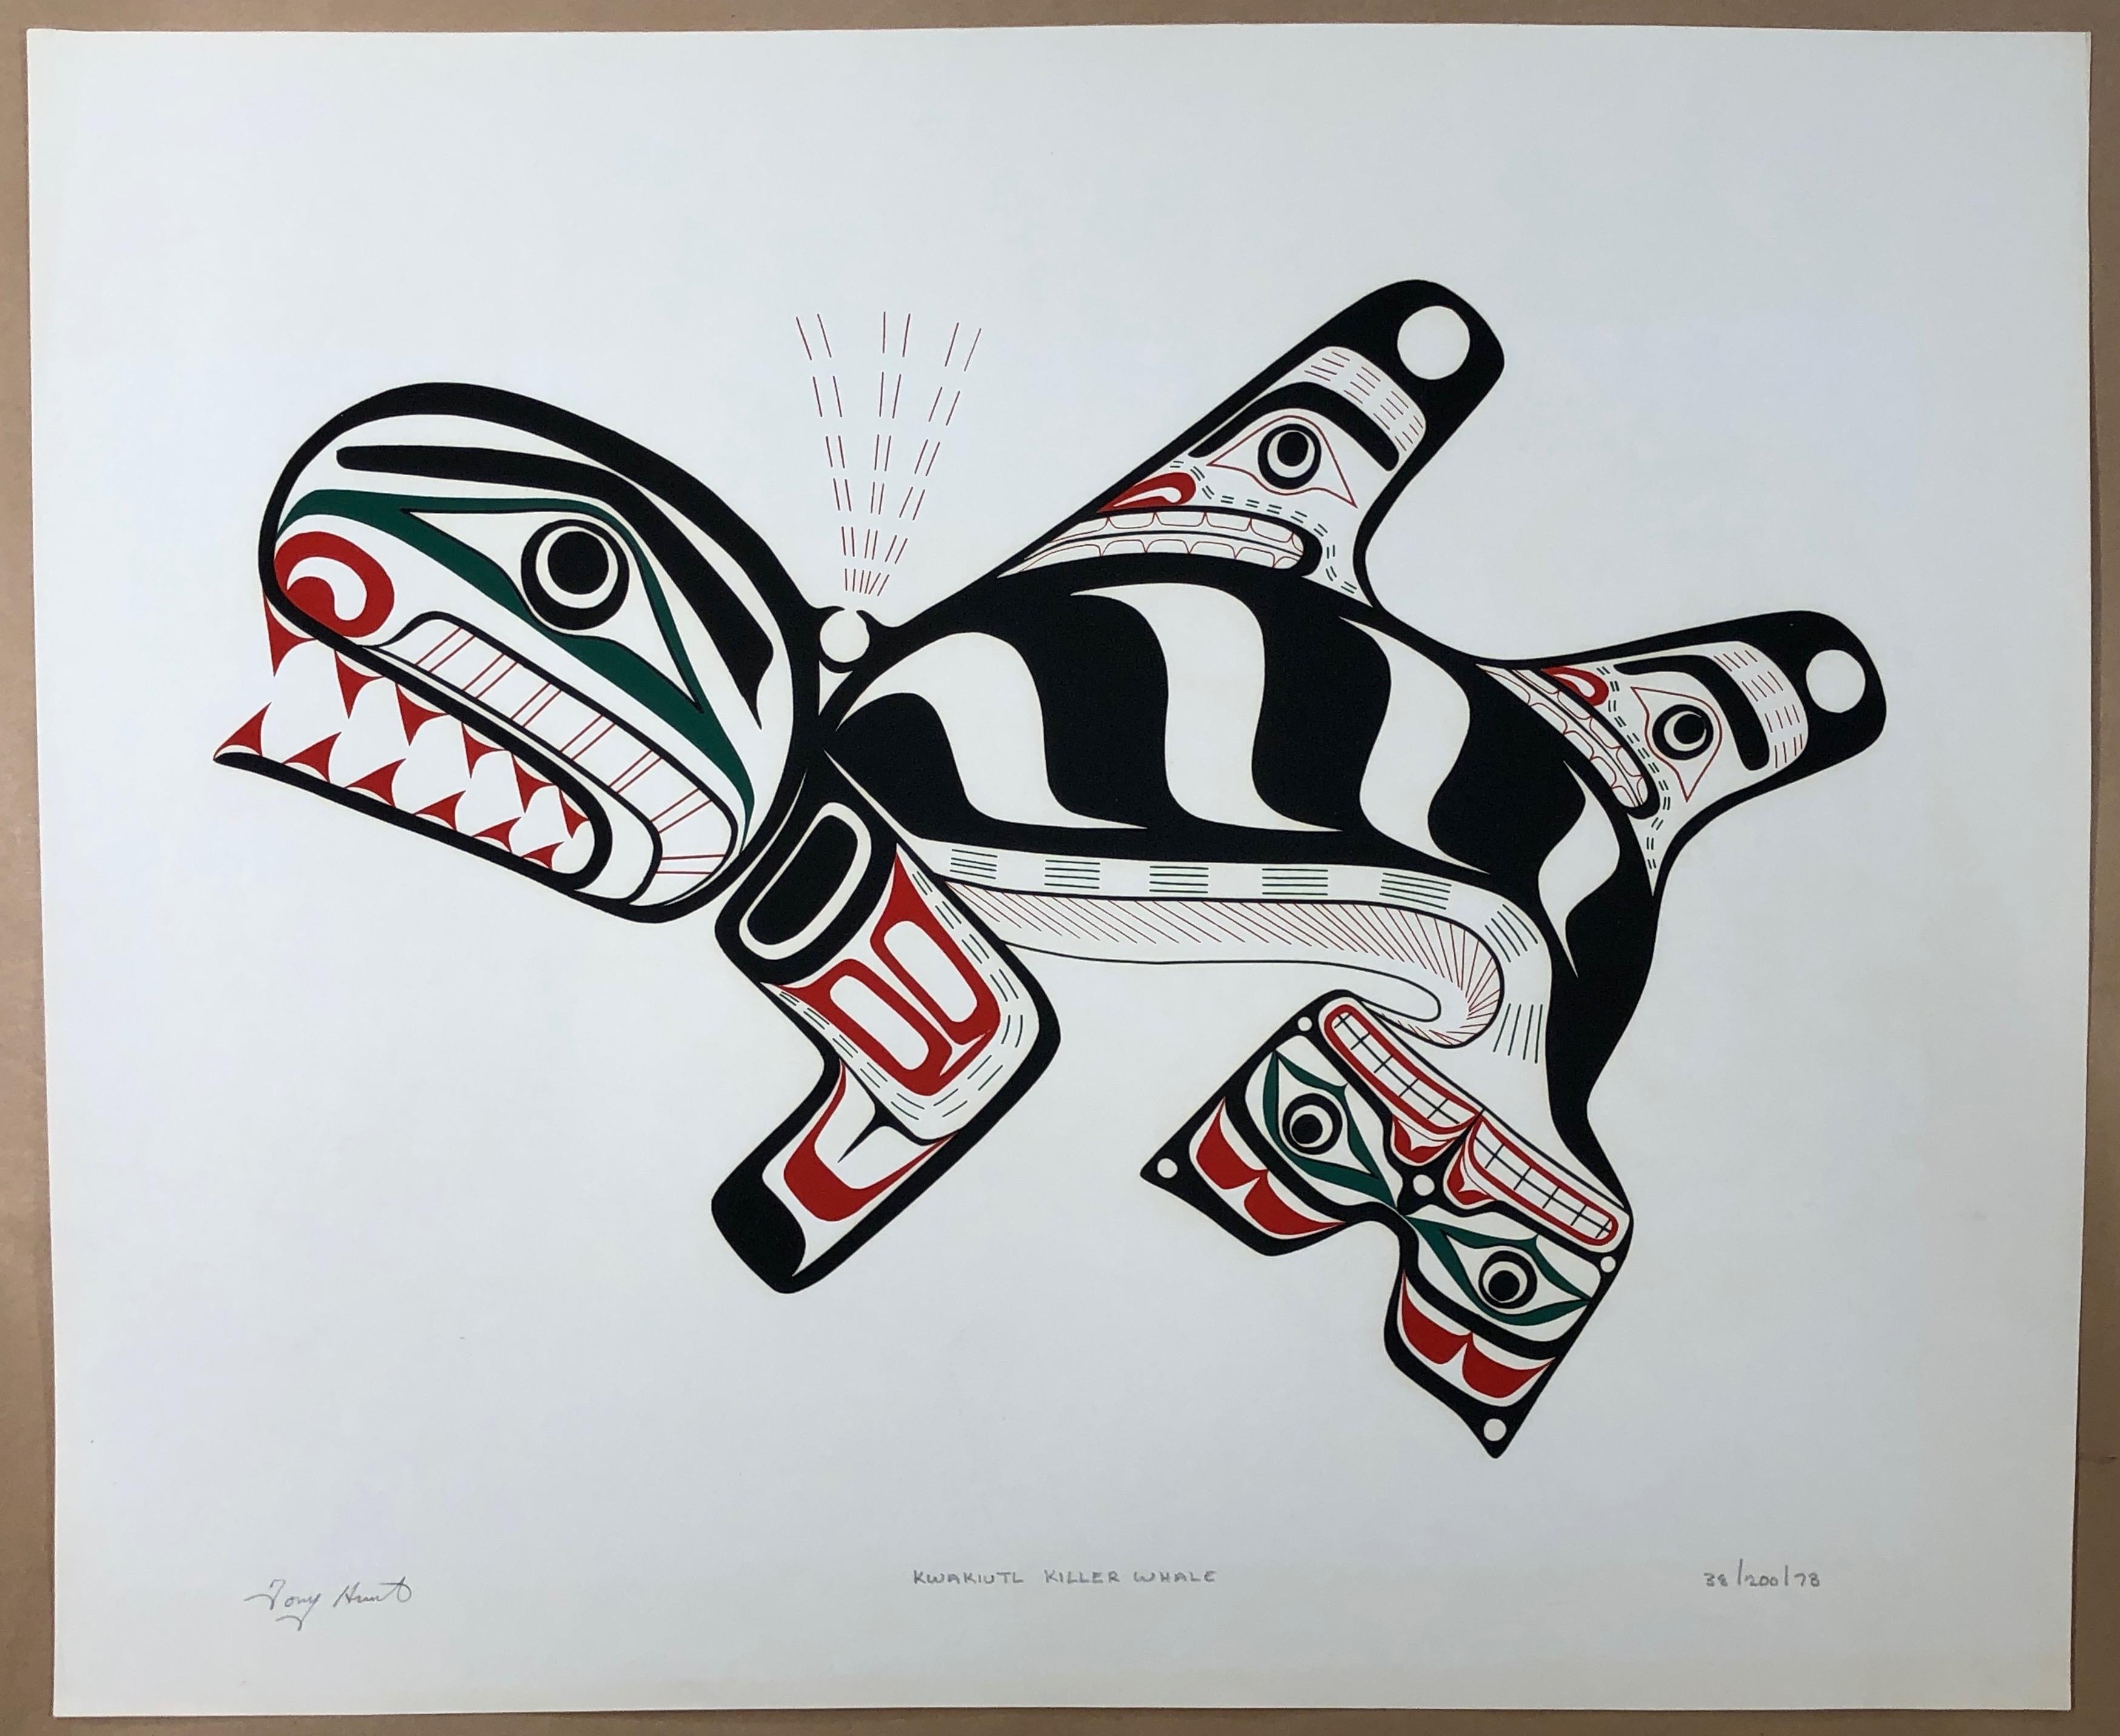 Tony Hunt Sr. Animal Print - Kwakiutl Killer Whale, color serigraph, screen print edition, First Nations, Canada